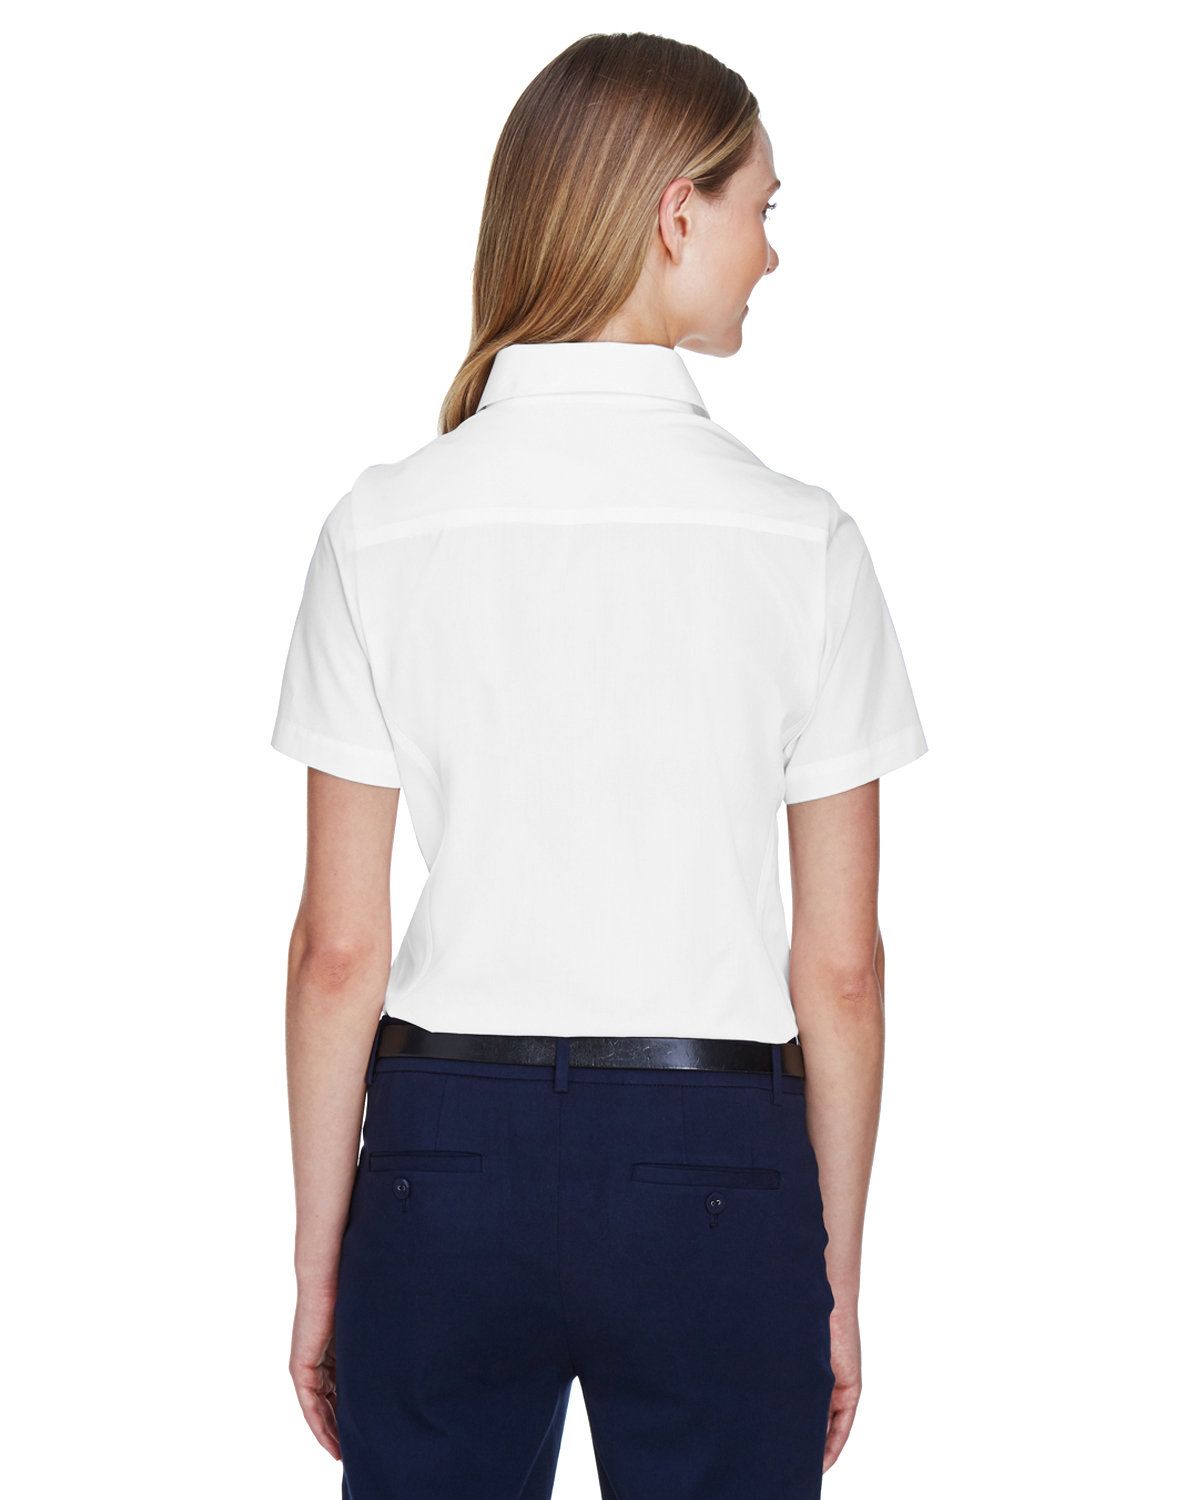 'Devon & Jones D620SW Ladies Crown Woven Collection Solid Broadcloth Short-Sleeve Shirt'